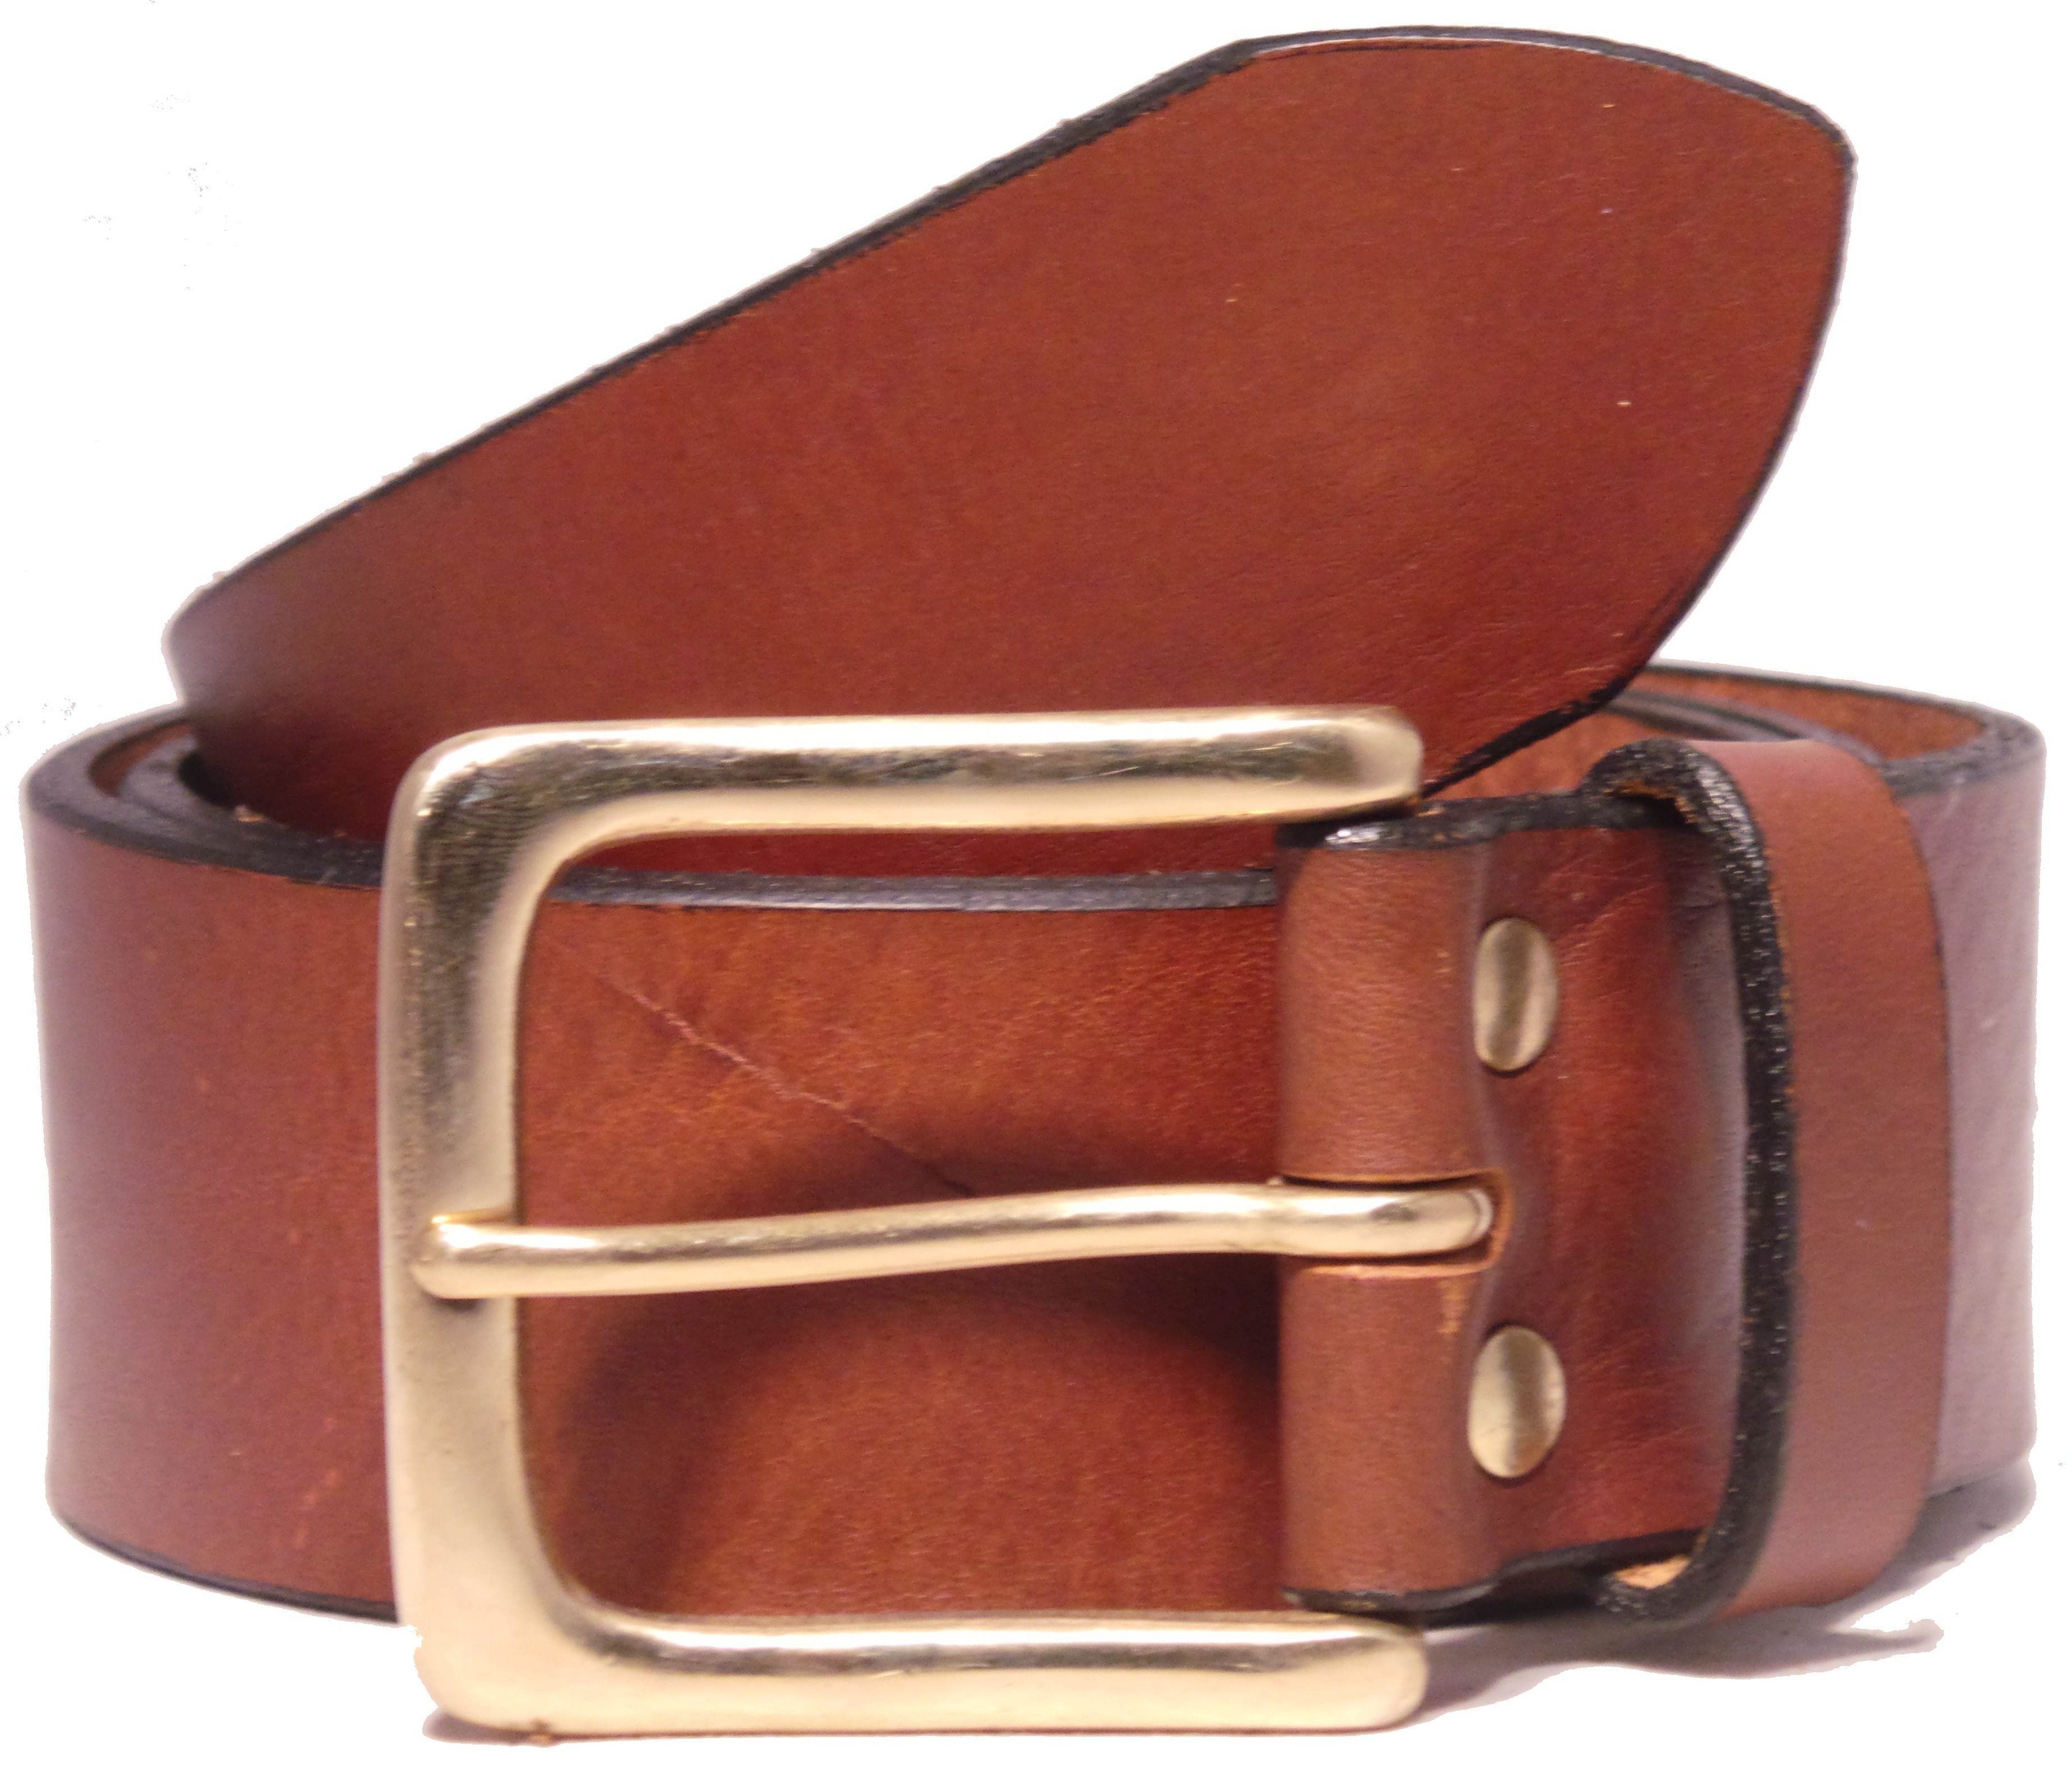 CLASSIC WIDE 1.75 BLACK Leather Belt  Scottsdale Belt Co. - Scottsdale  Belt Company